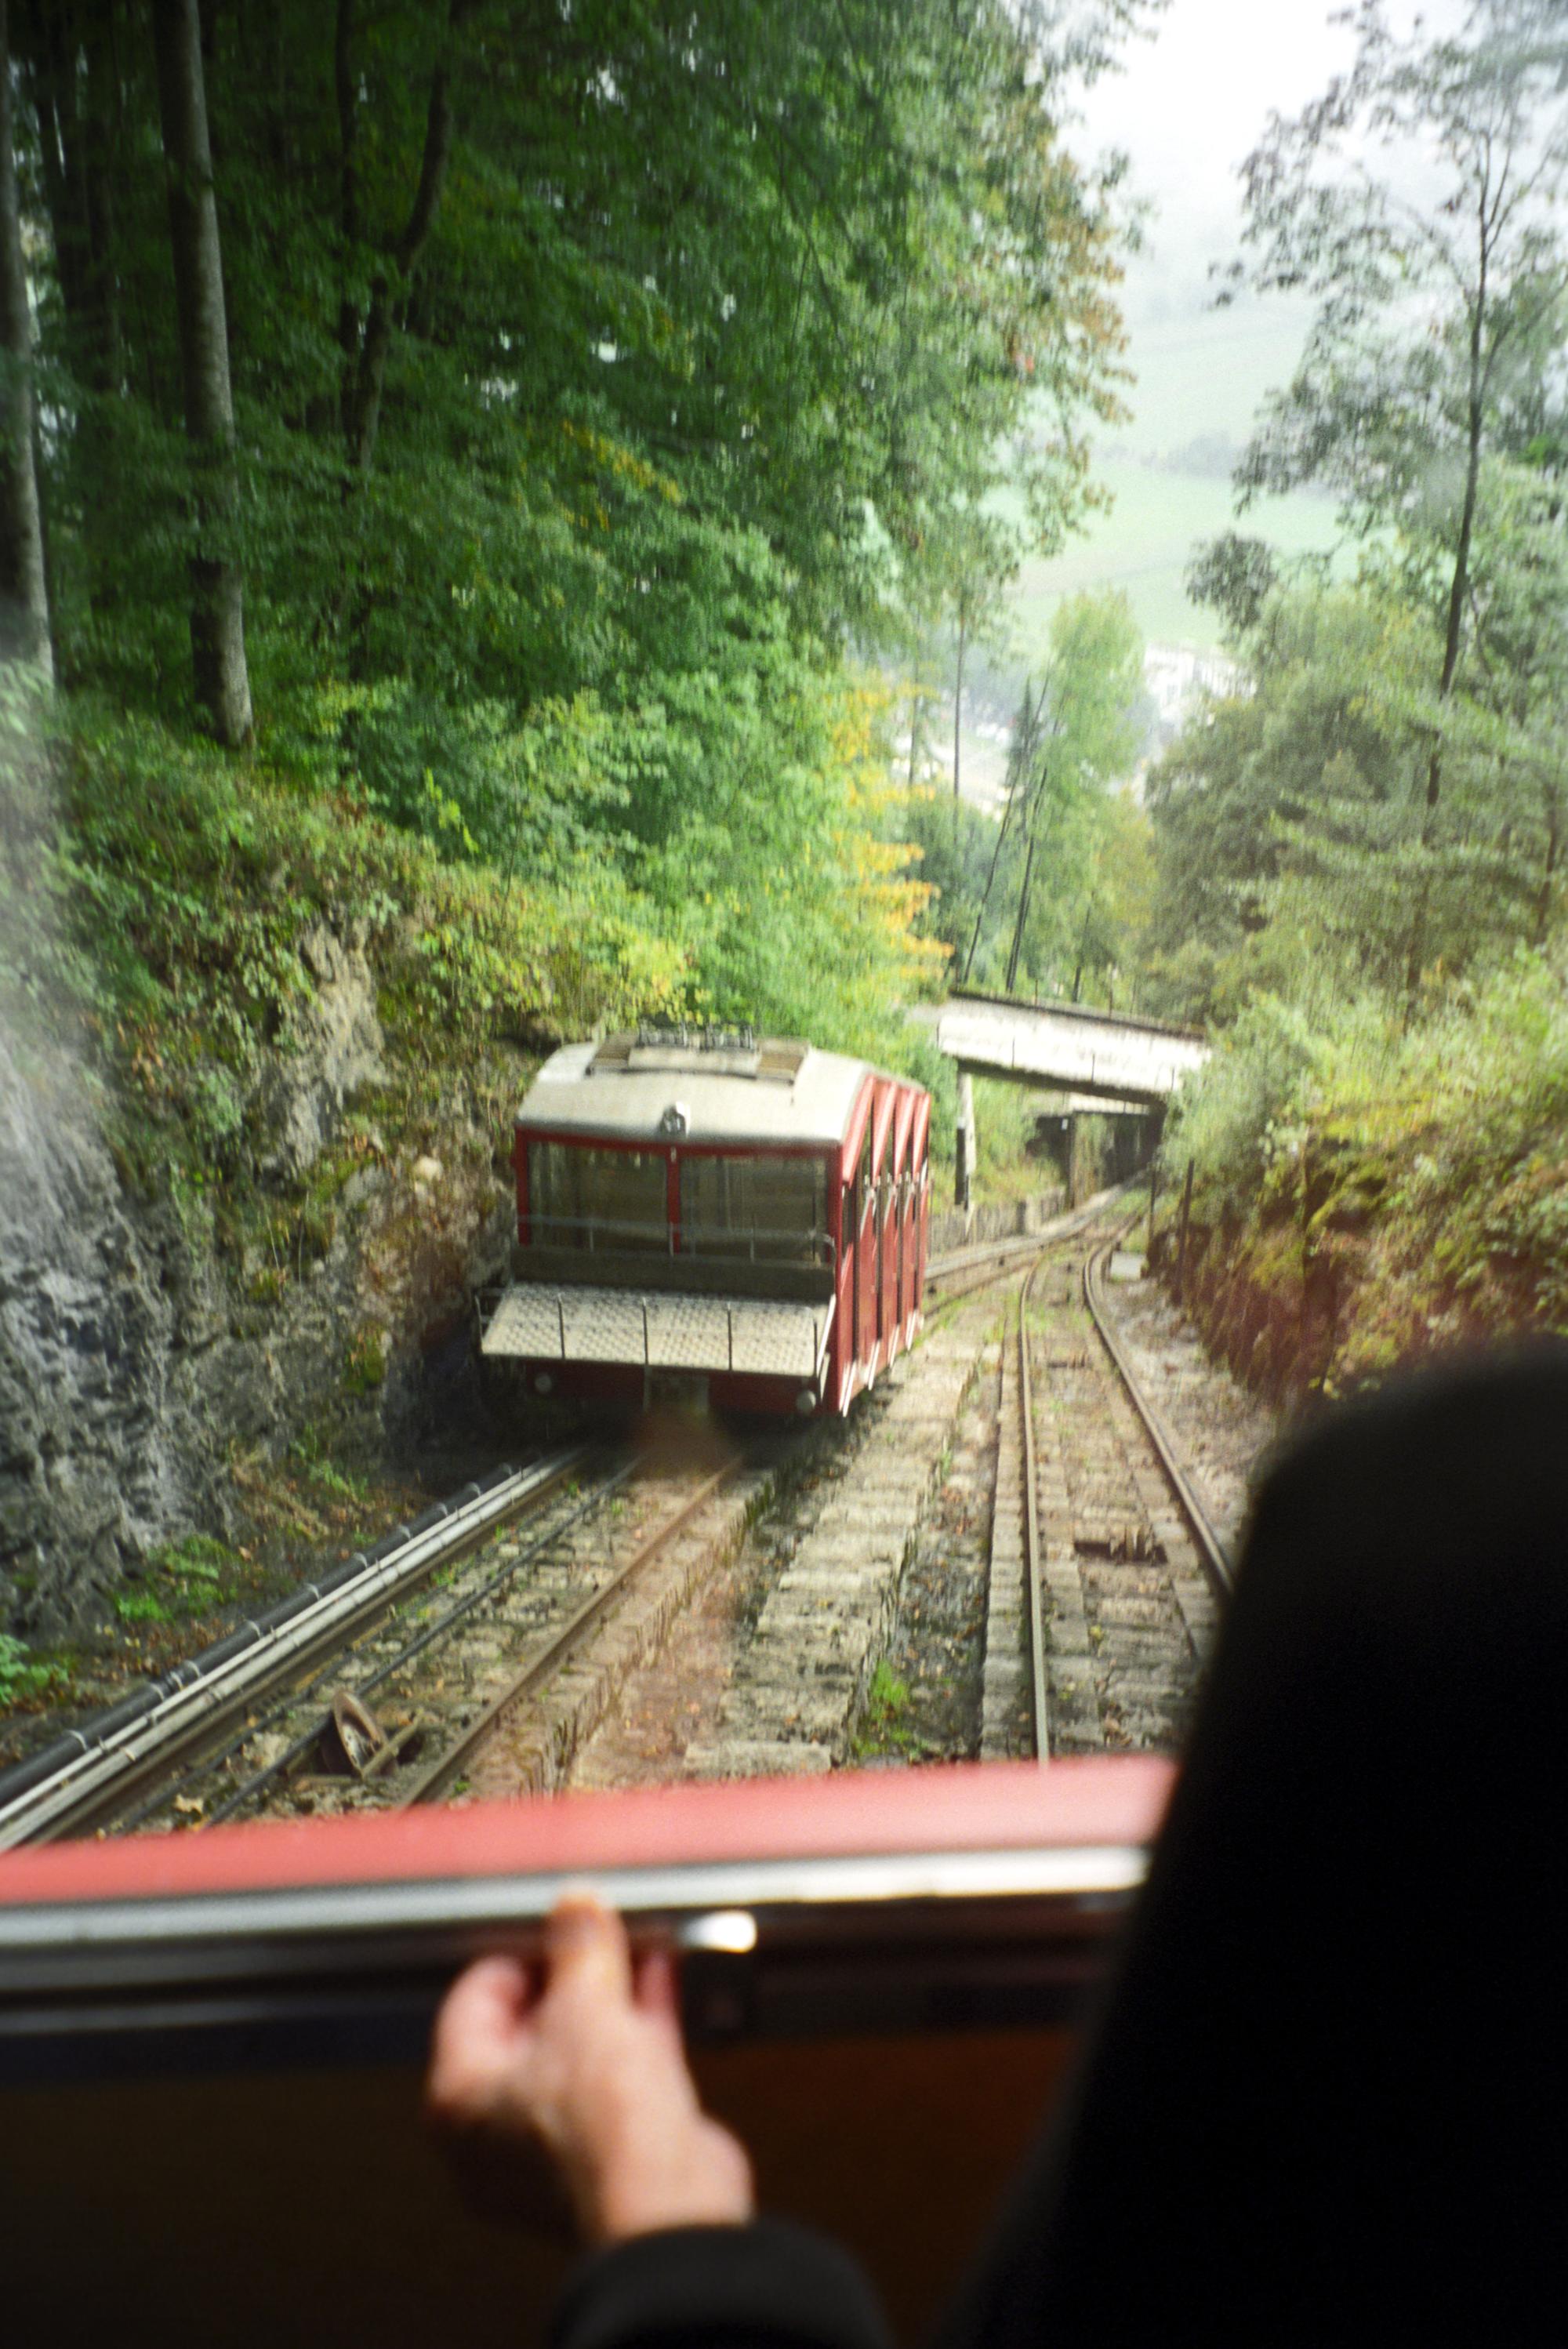 Switzerland - Tram Cars